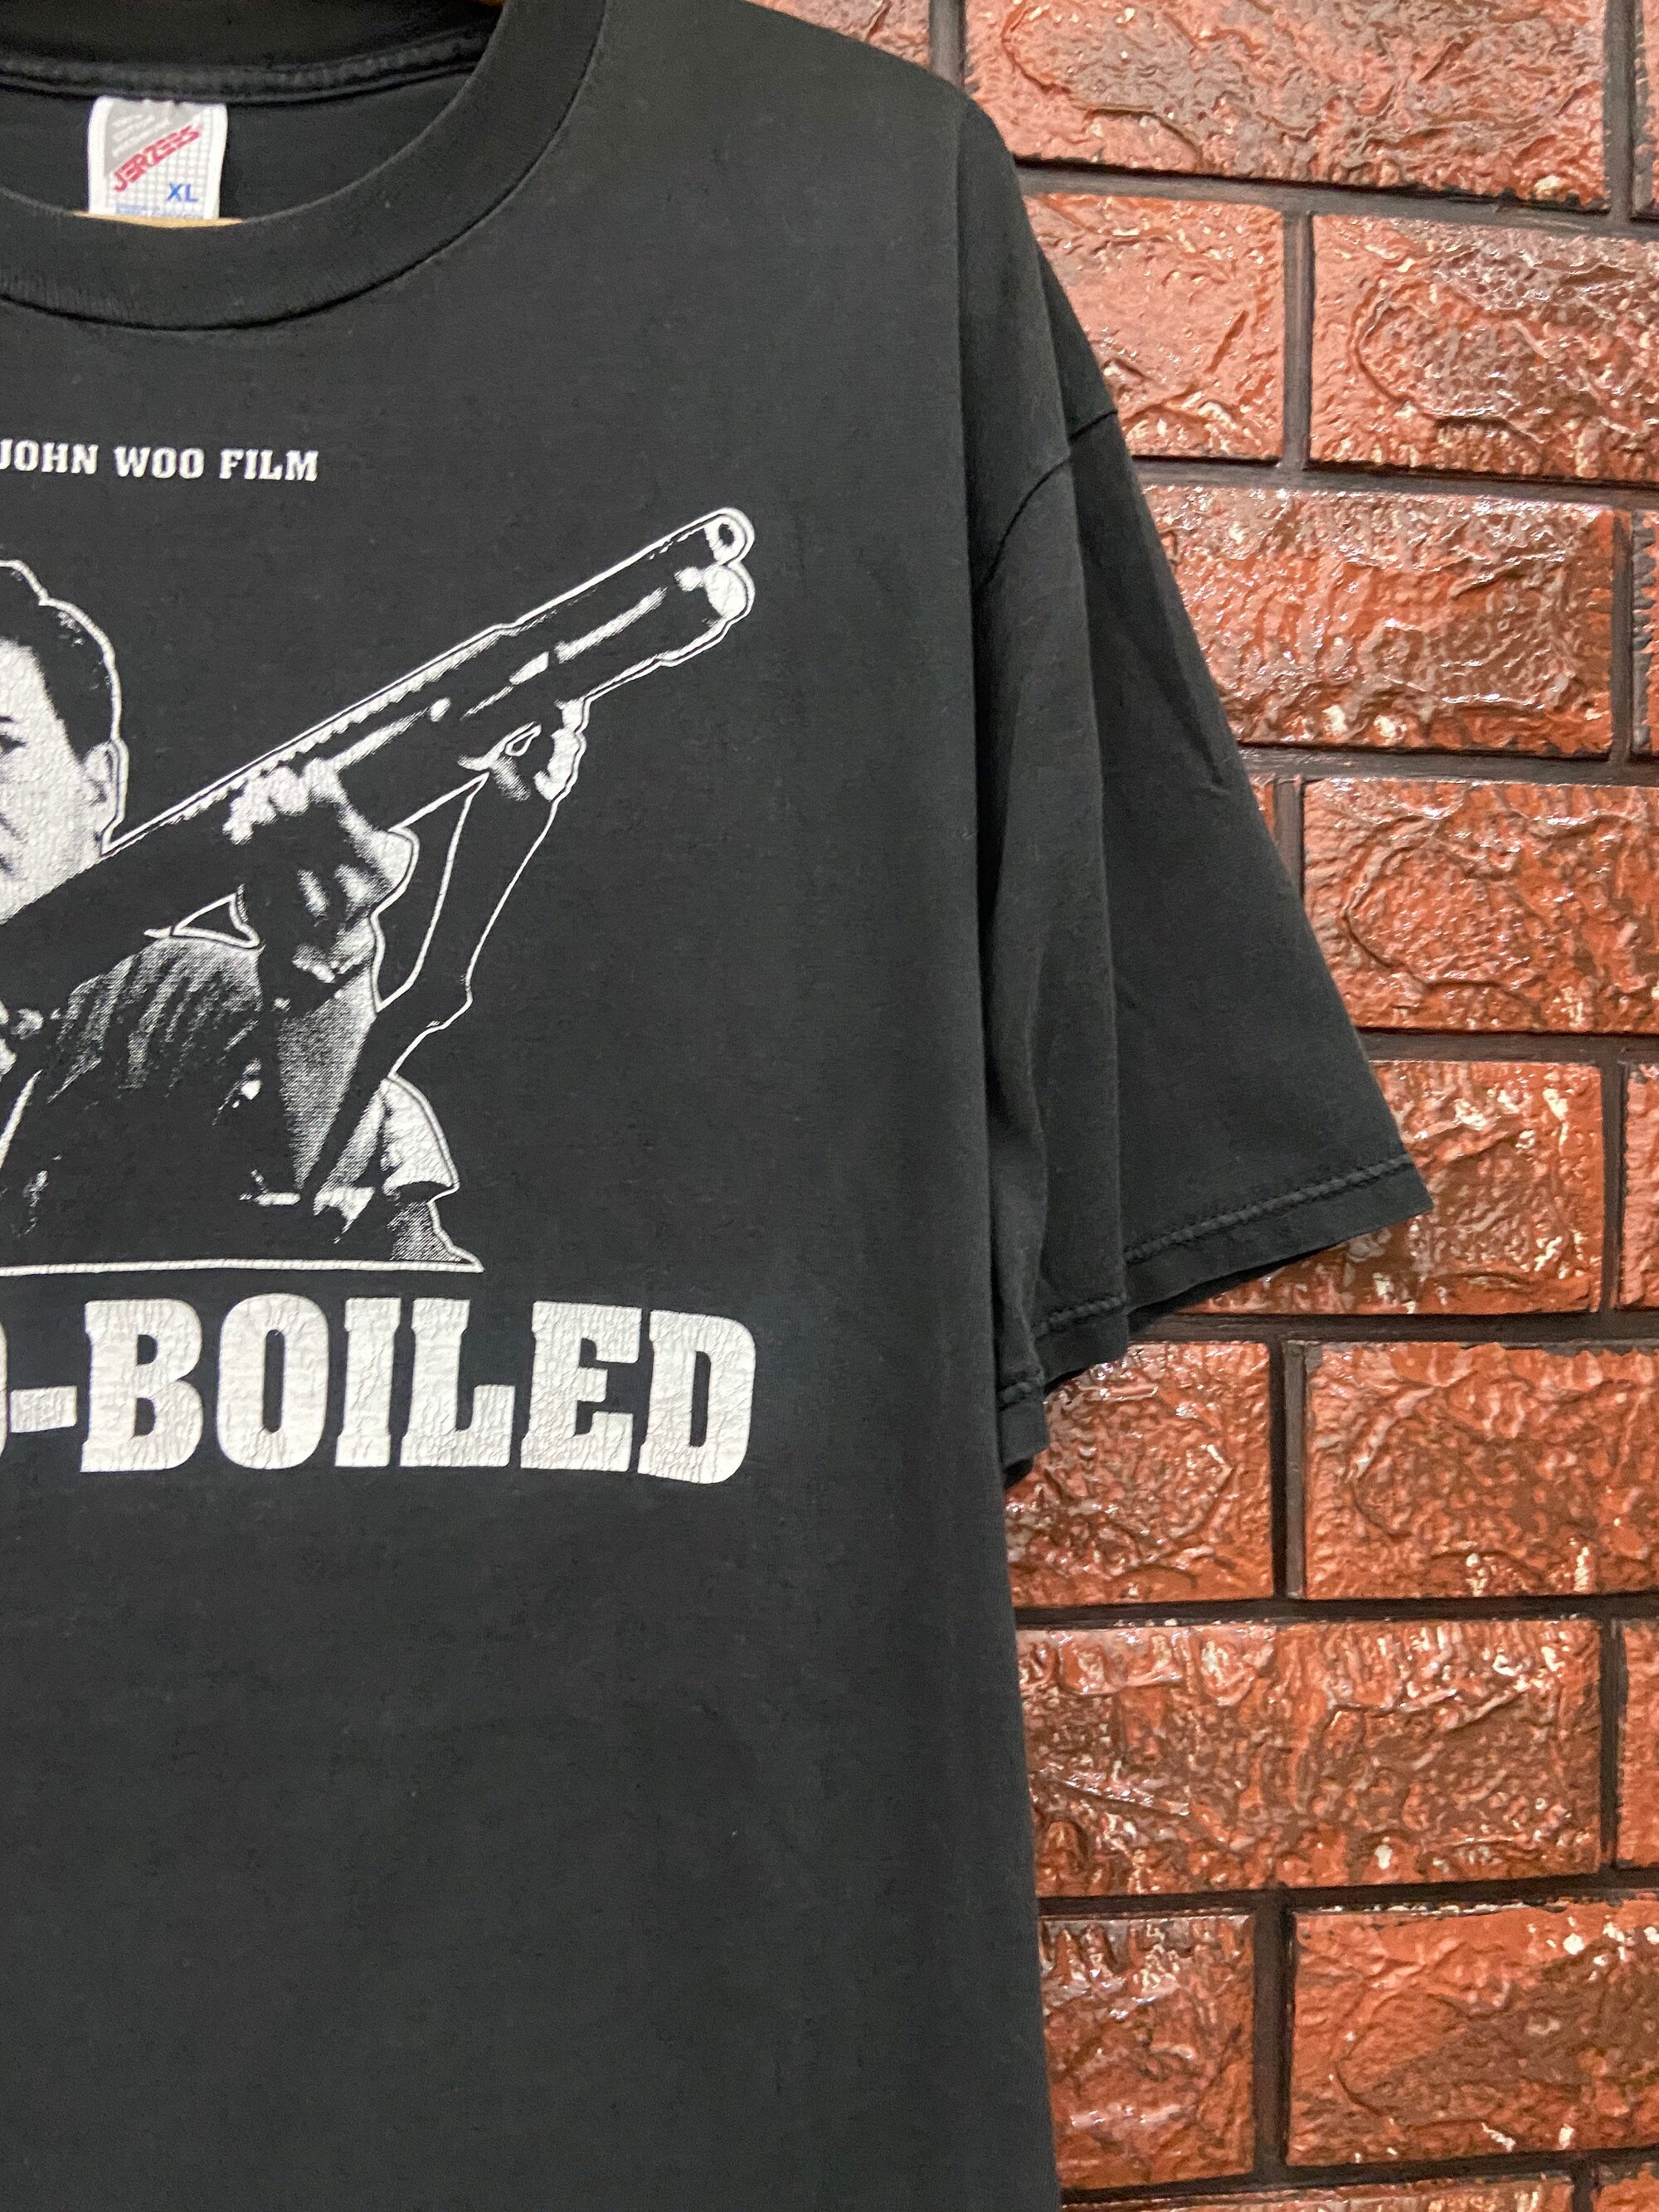 Vintage 90s Hard Boiled 1992 Action Crime Thriller Hong Kong Movie By John Woo T Shirt /Movie T Shirt